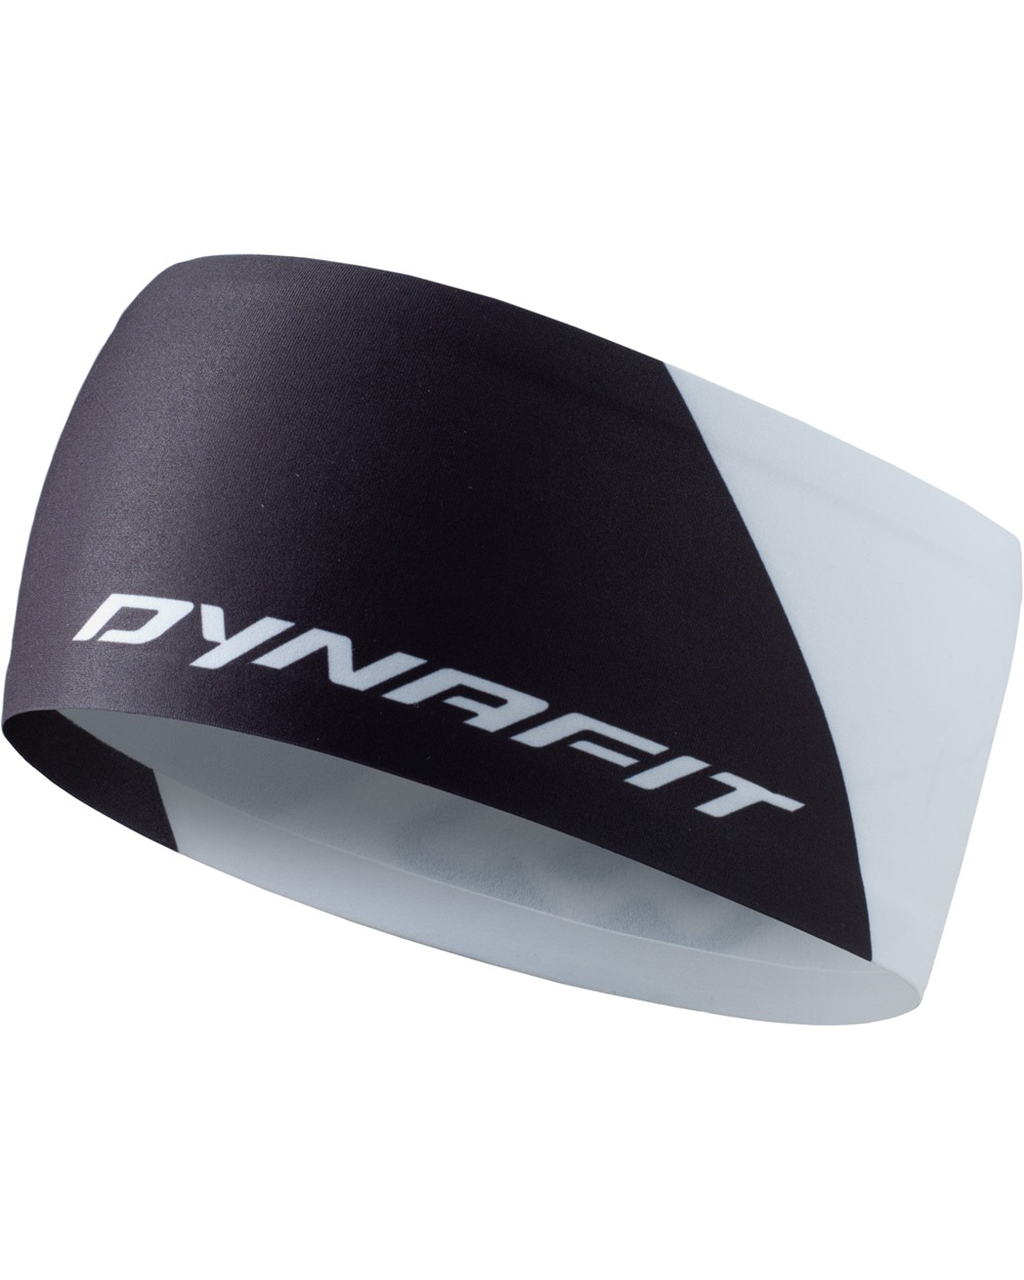 Dynafit Performance 2 Dry Headband Black